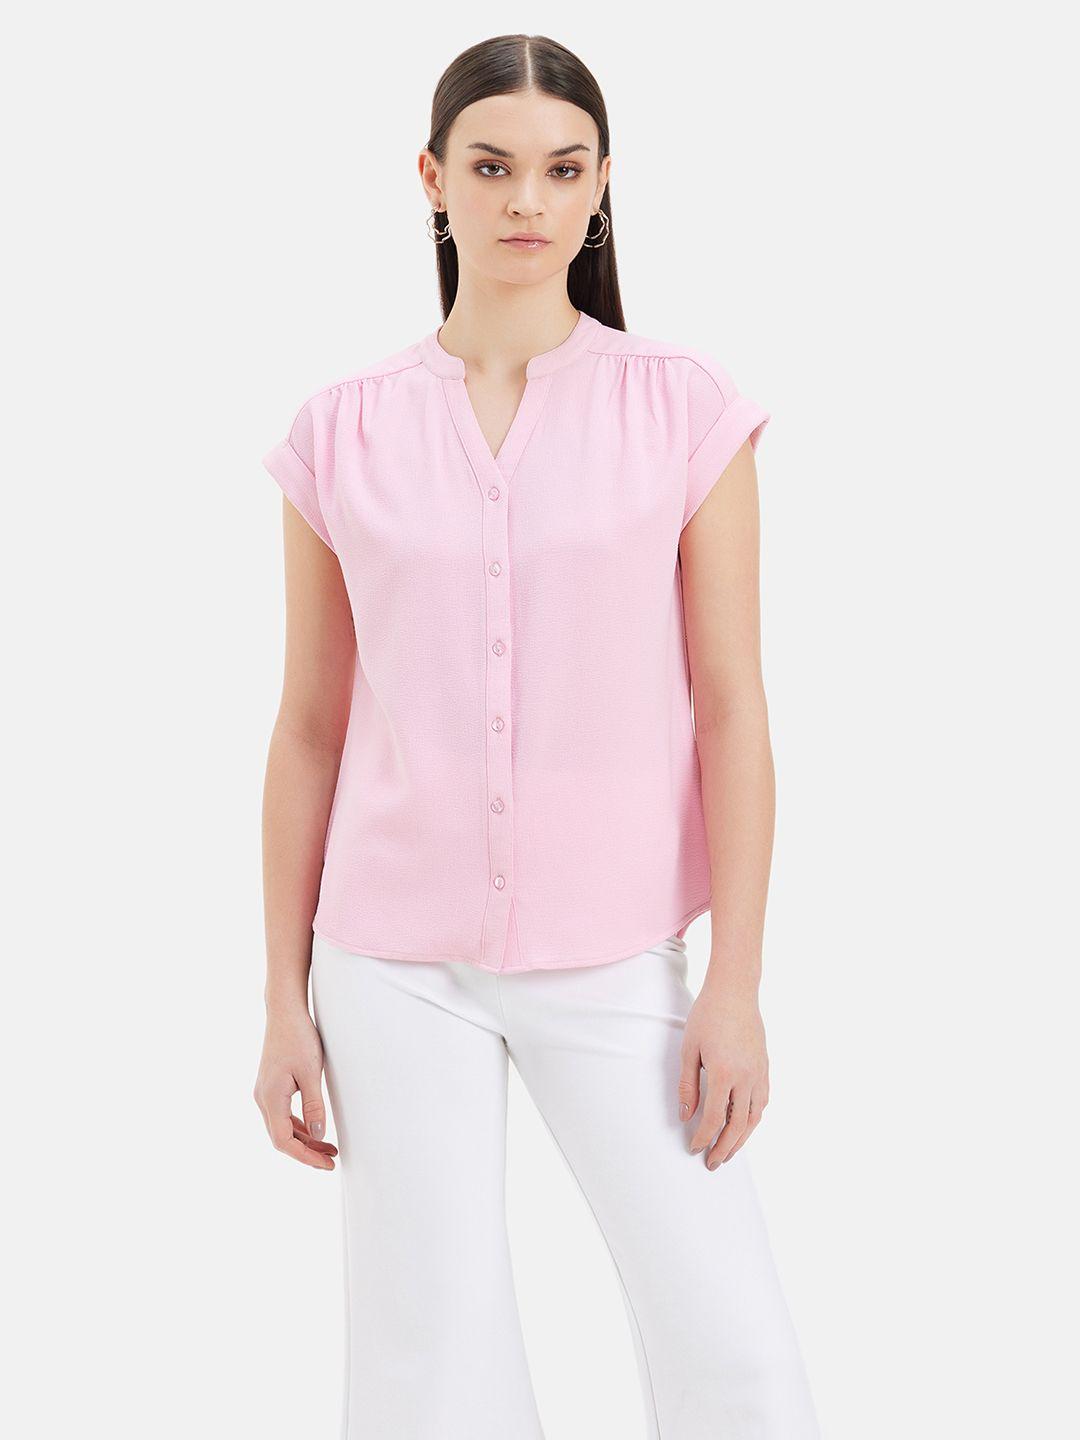 kazo mandarin collar extended sleeves gathered detailed shirt style top